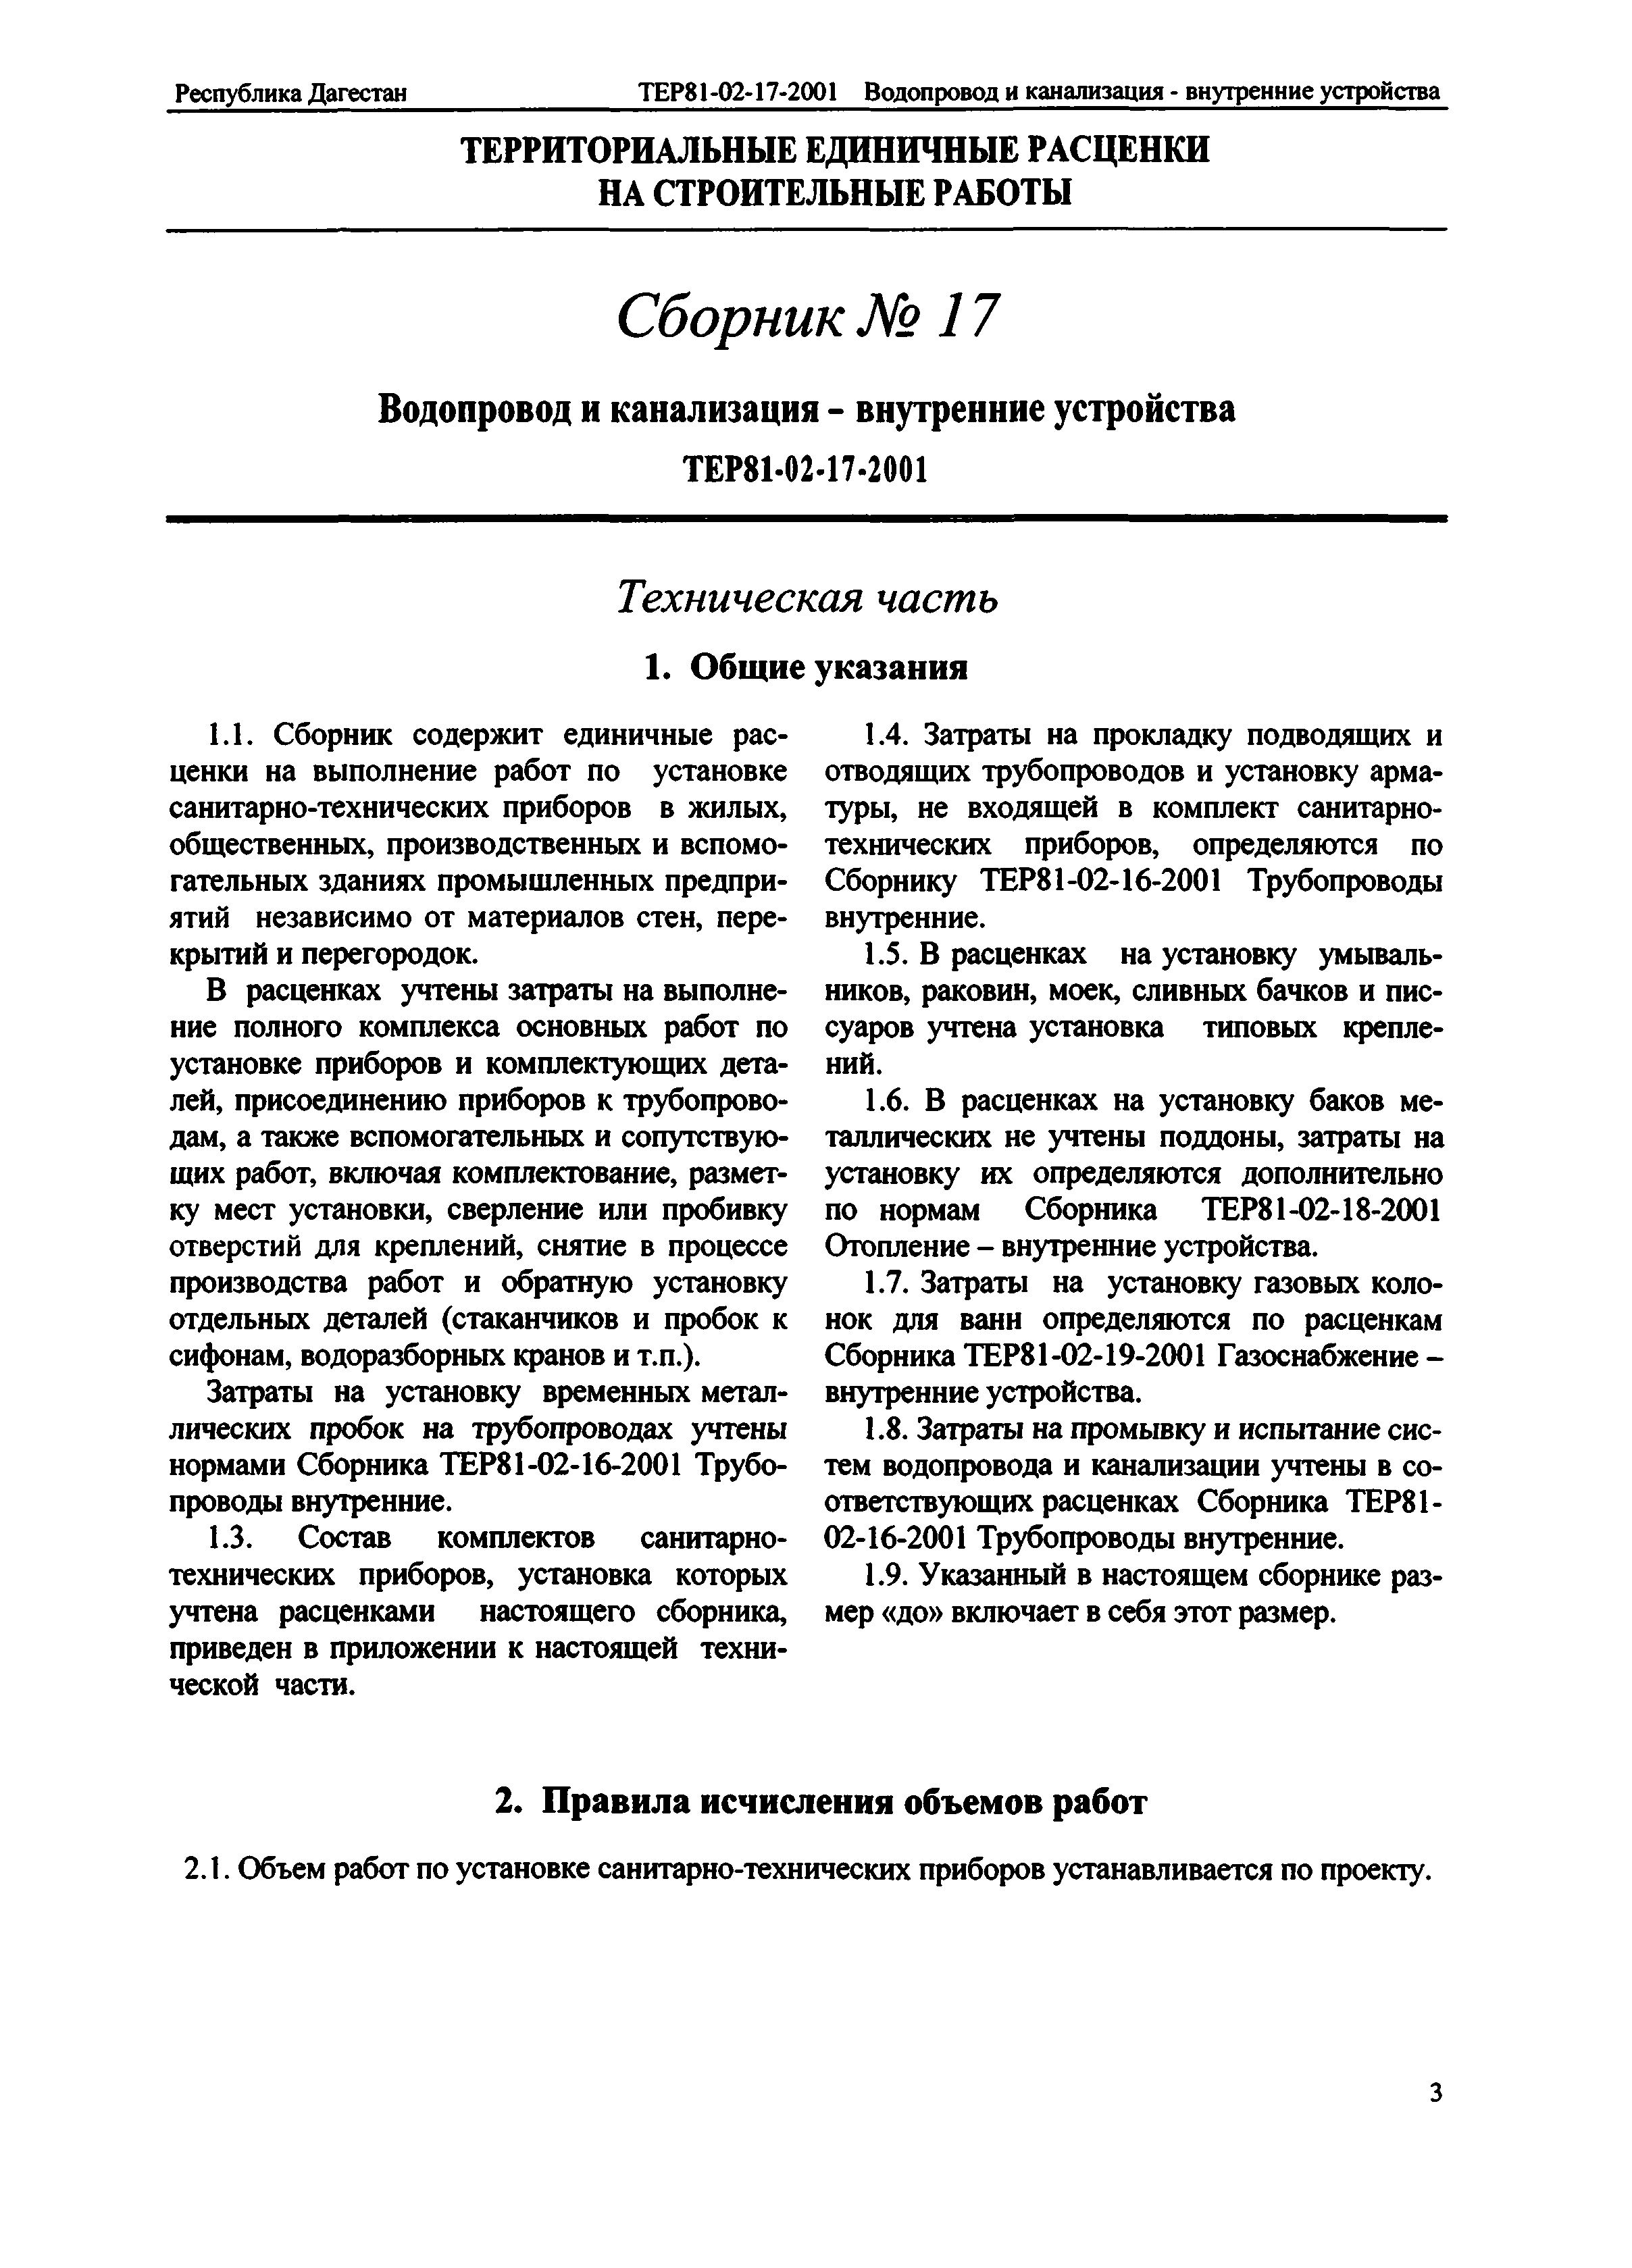 ТЕР Республика Дагестан 2001-17